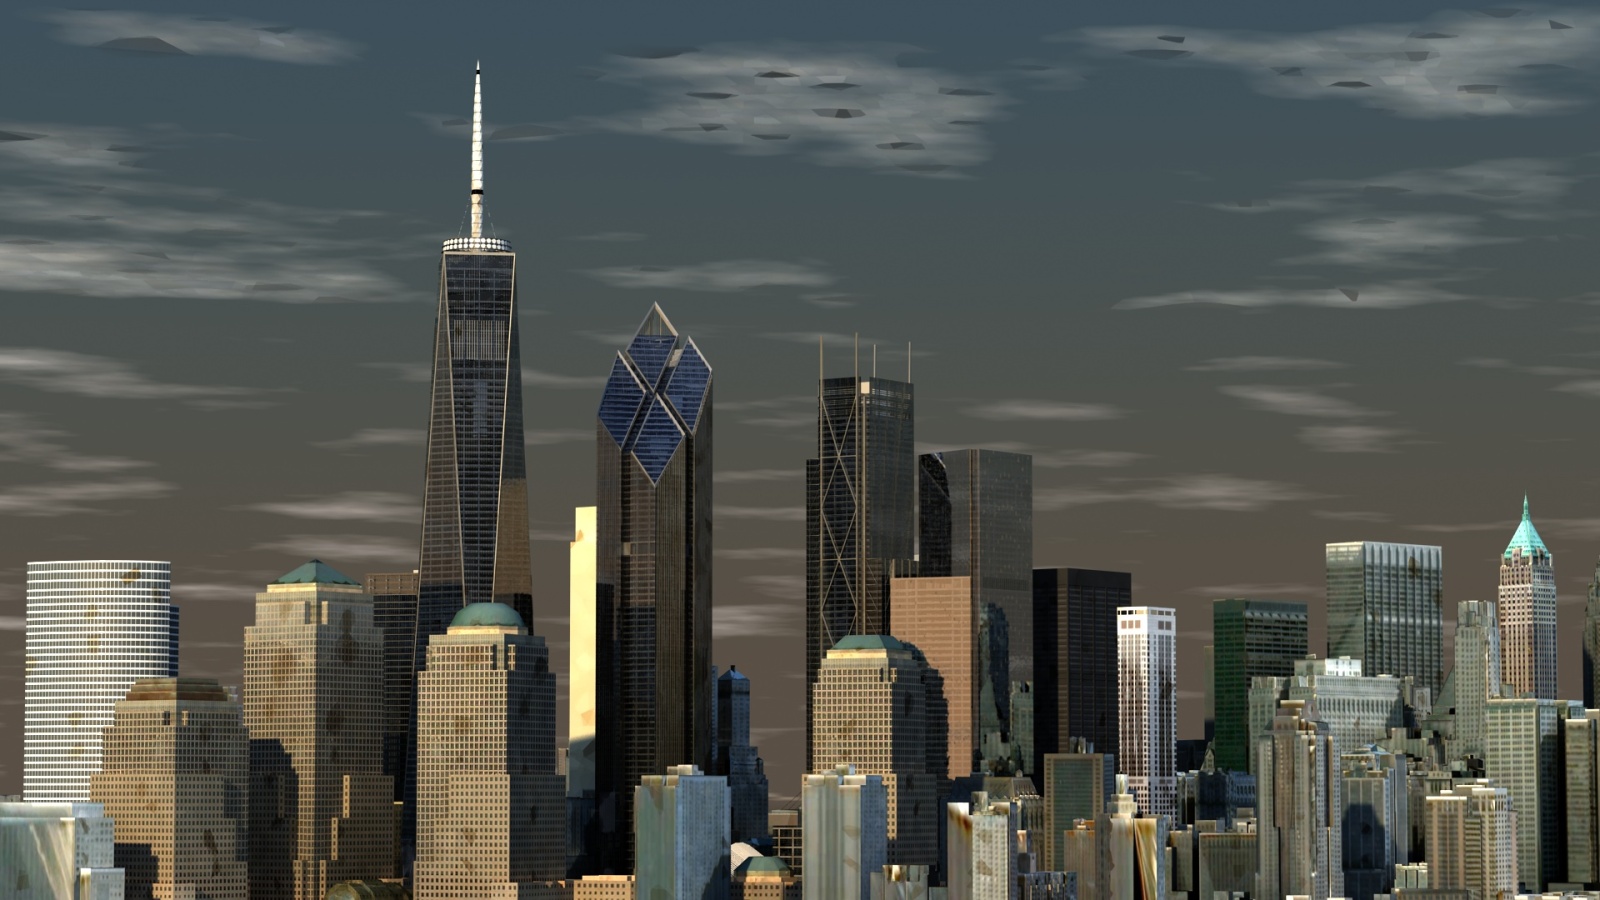 New York One World Trade Center 1wtc 541m 1776ft Fl